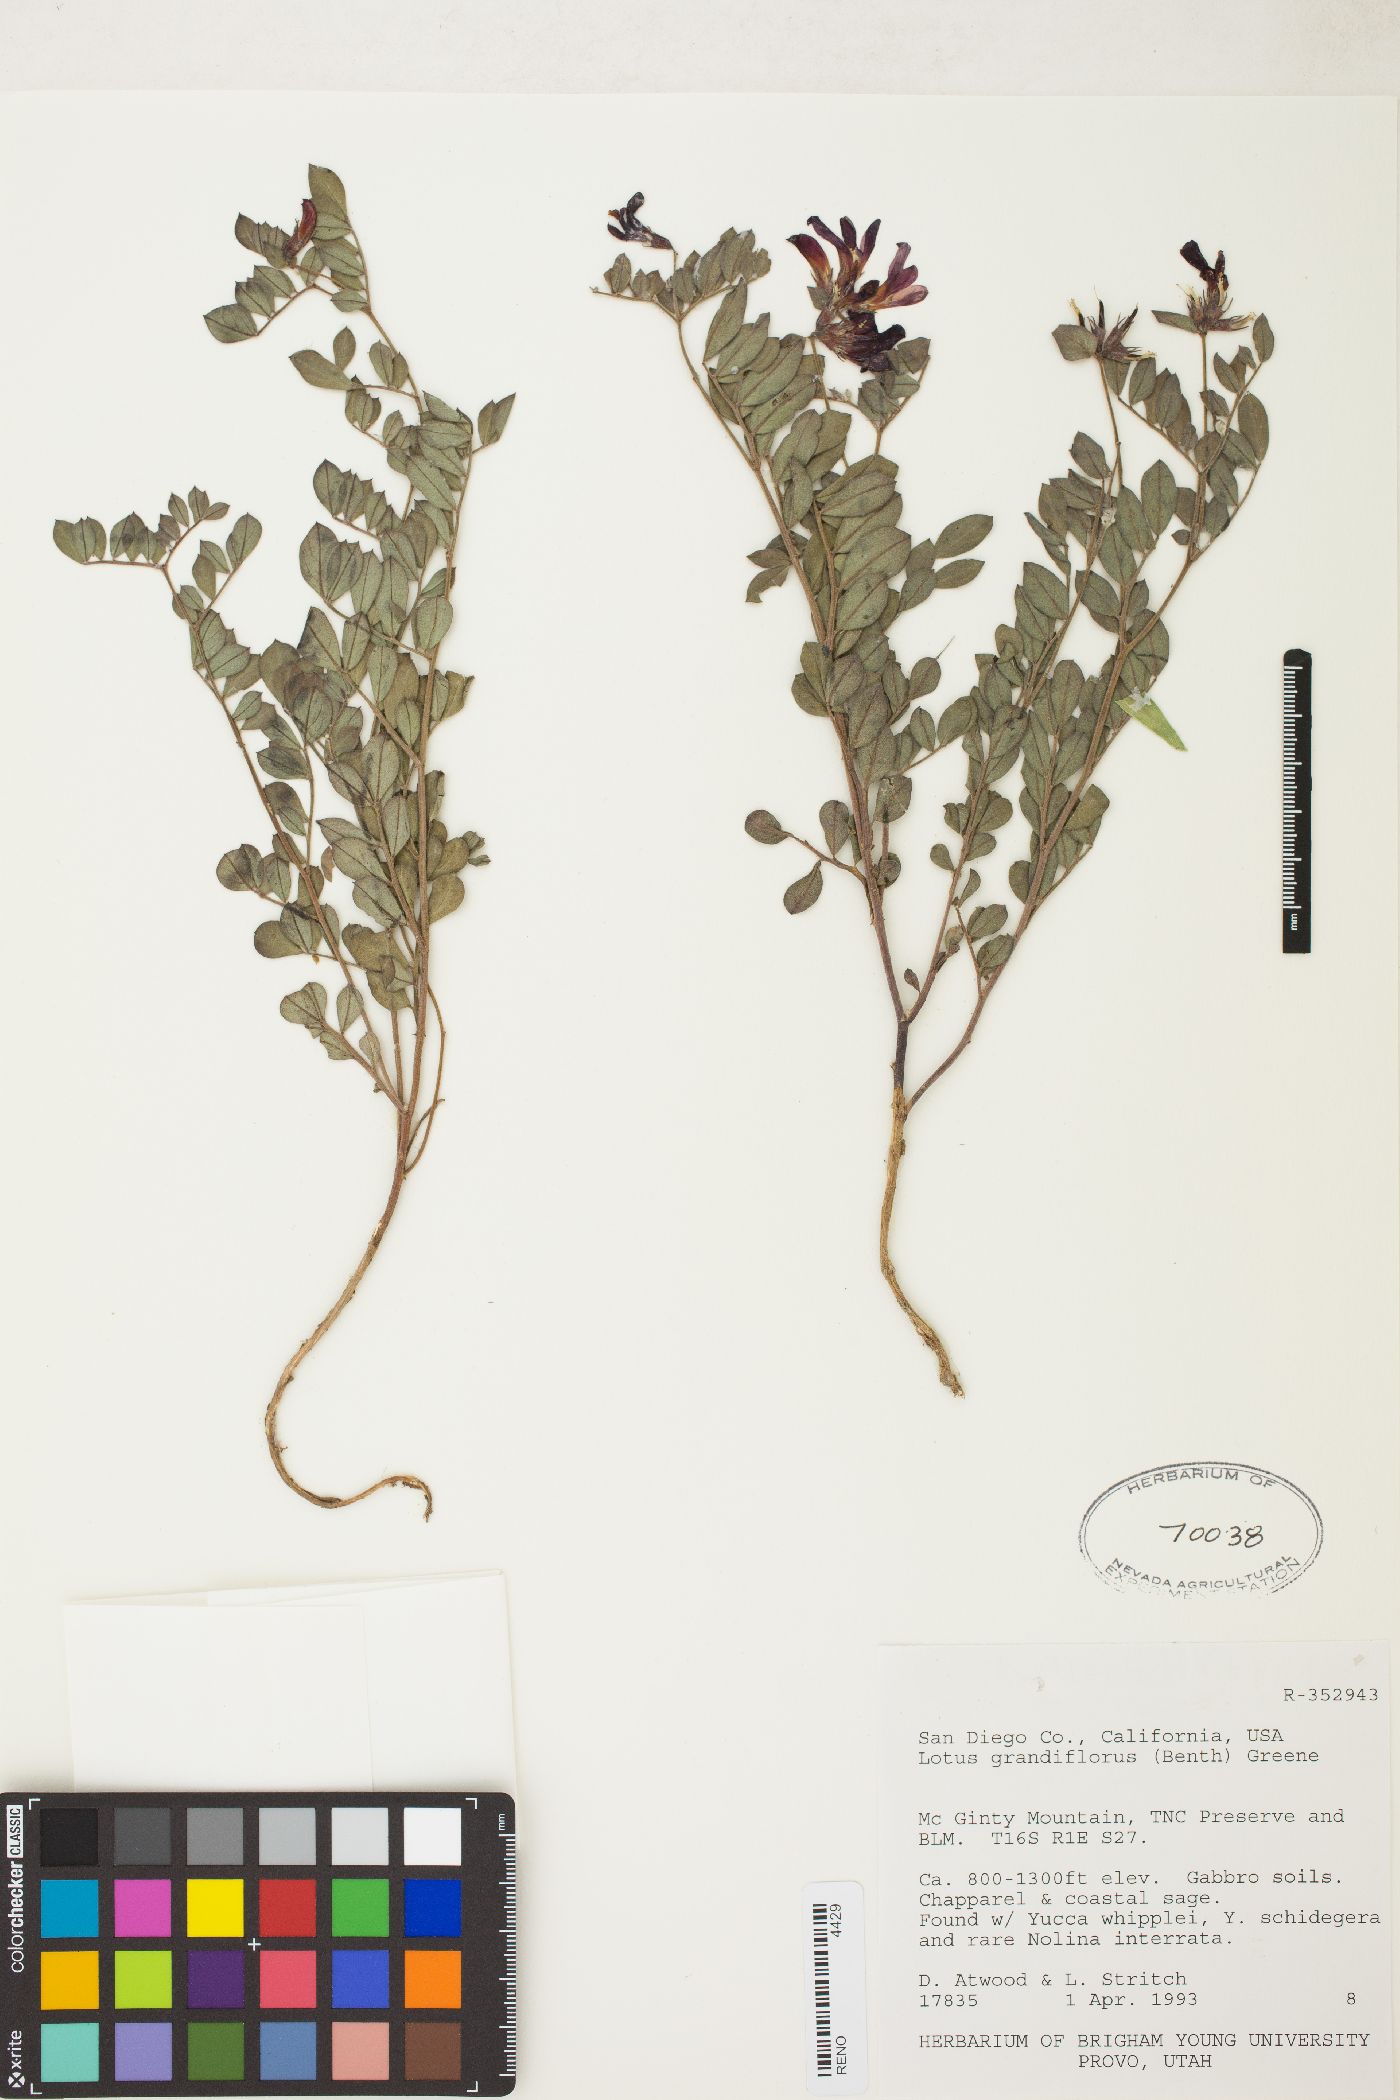 Acmispon grandiflorus var. macranthus image